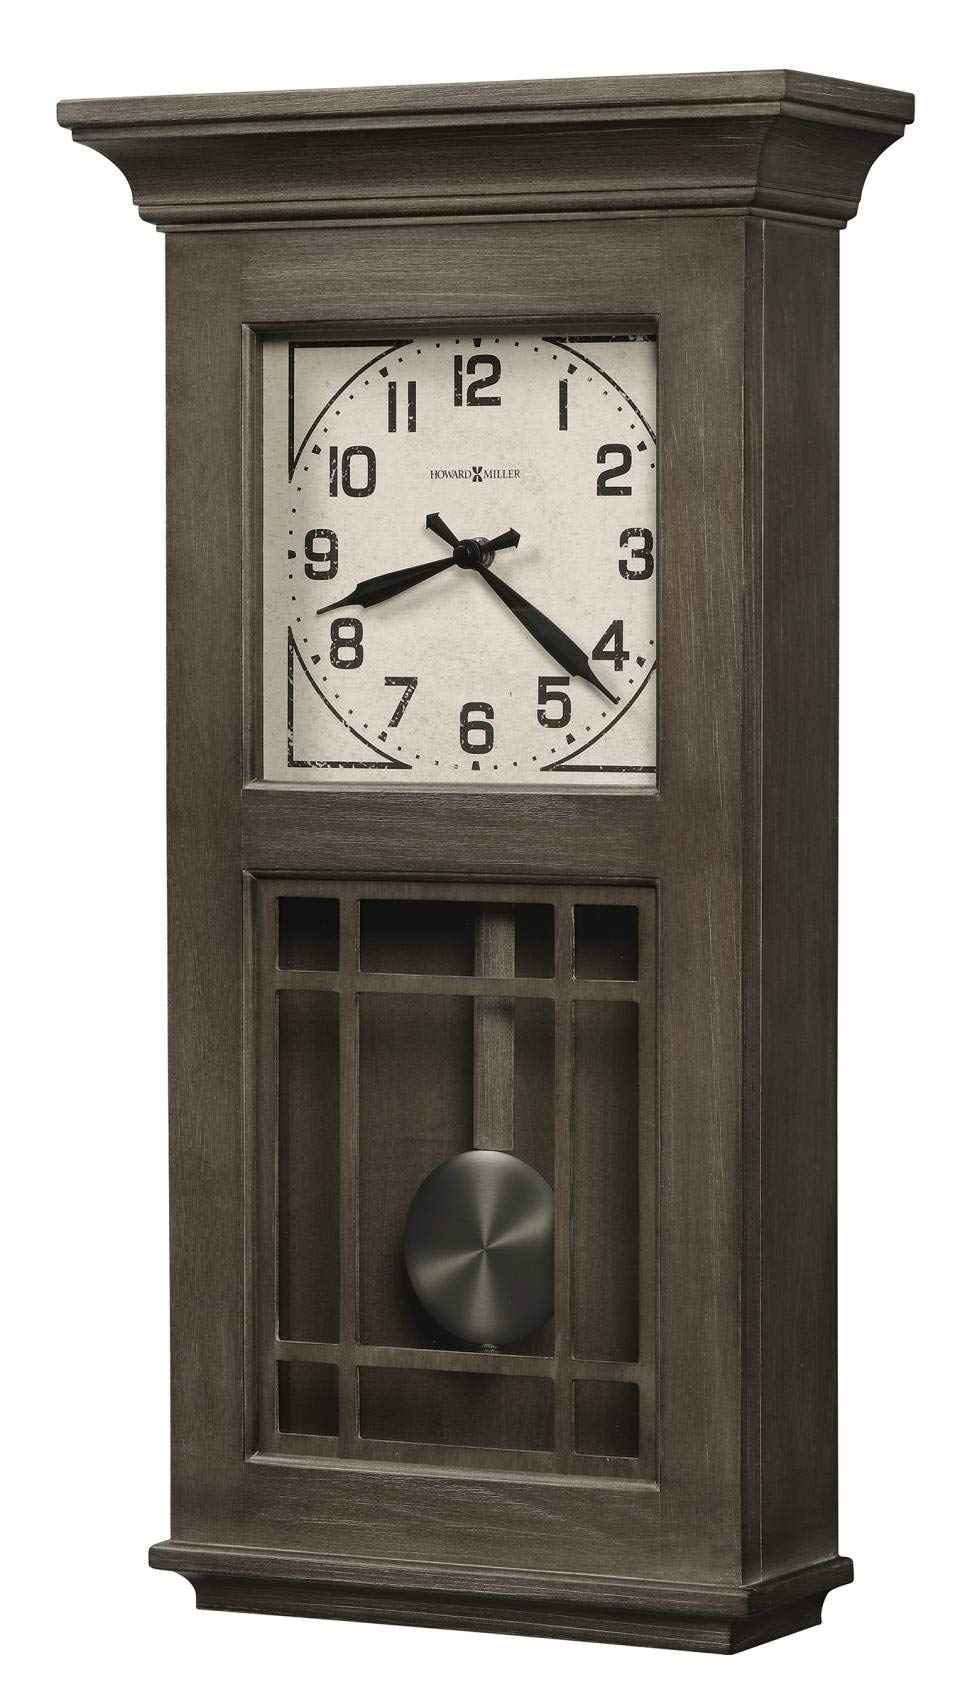 Howard Miller Sanborn Wall Clock II 549-517 – Aged Boyne Falls Finish, Natural Reclaimed Wood Design, Vintage Home Decor, Quartz Single-Chime Movement, Automatic Nighttime Chime Shut-Off